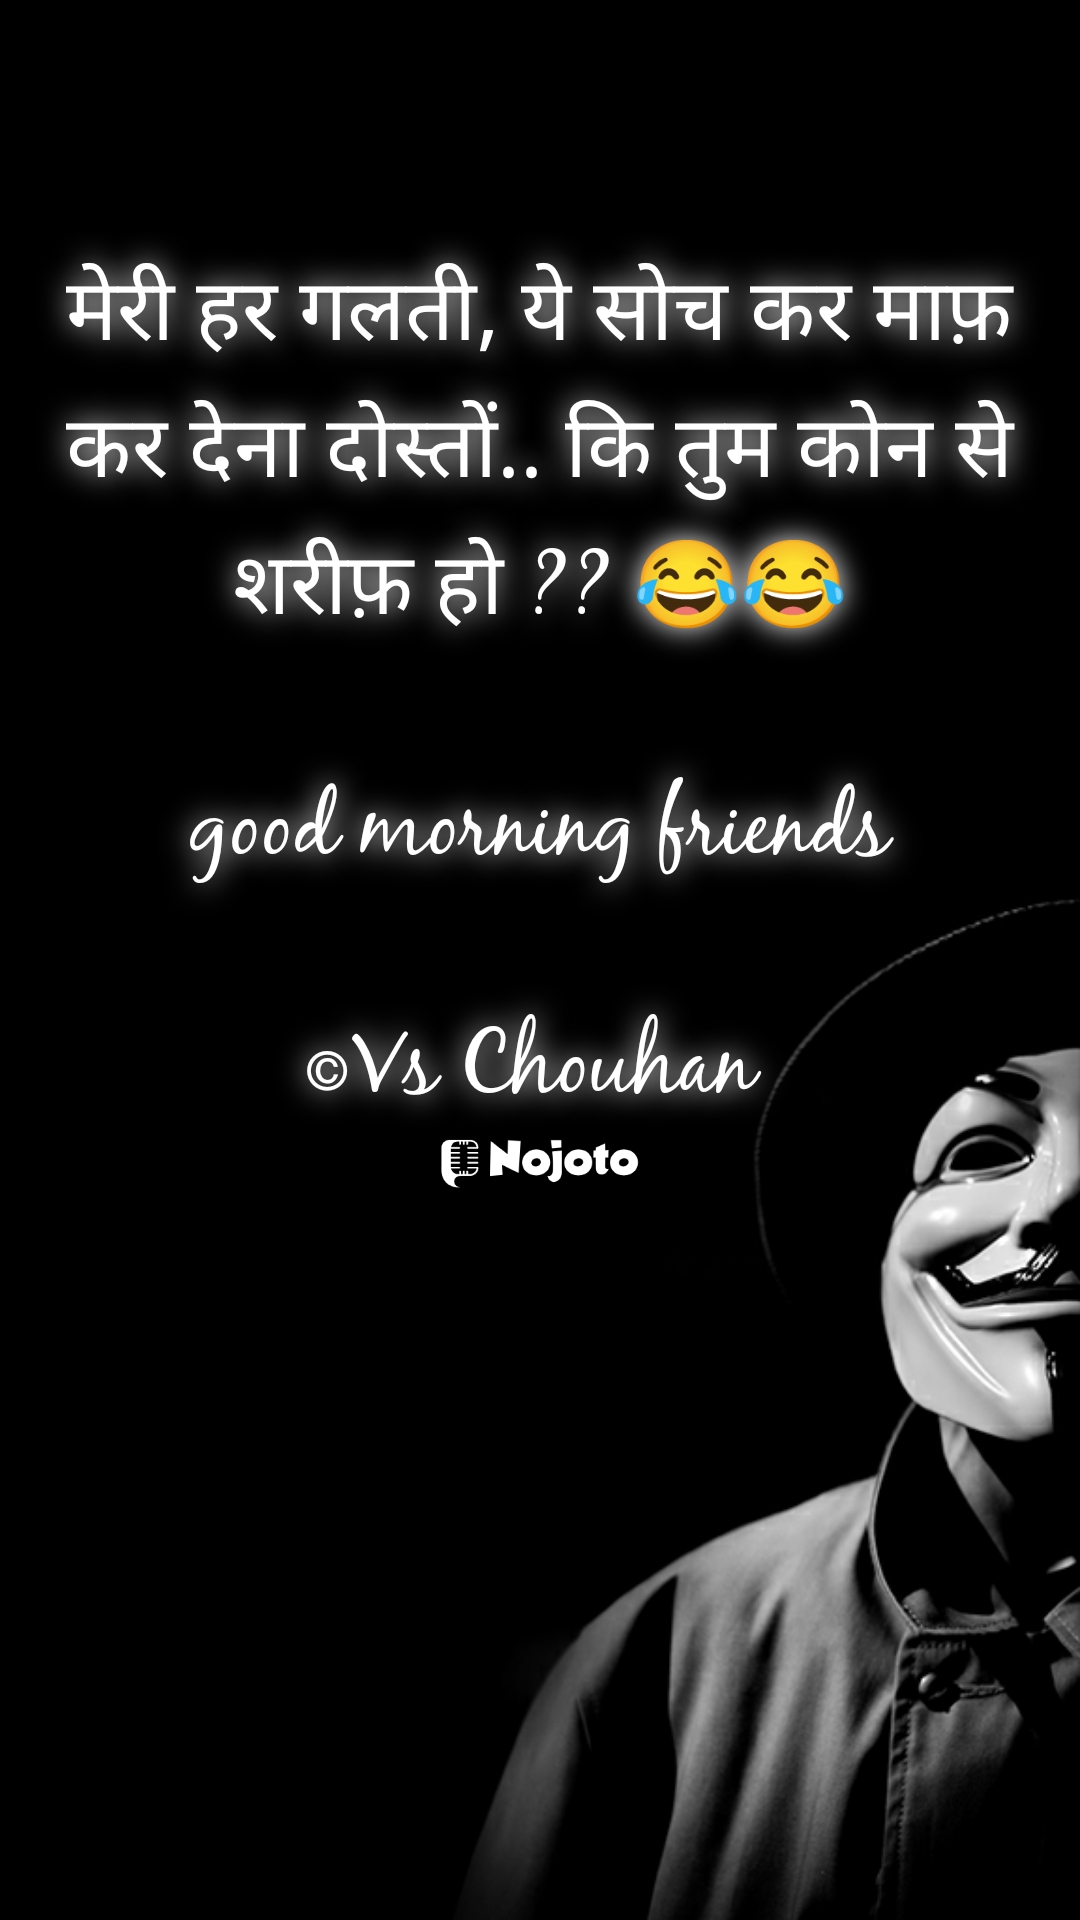 #Good #Morning #laughter #thought 

#Joker